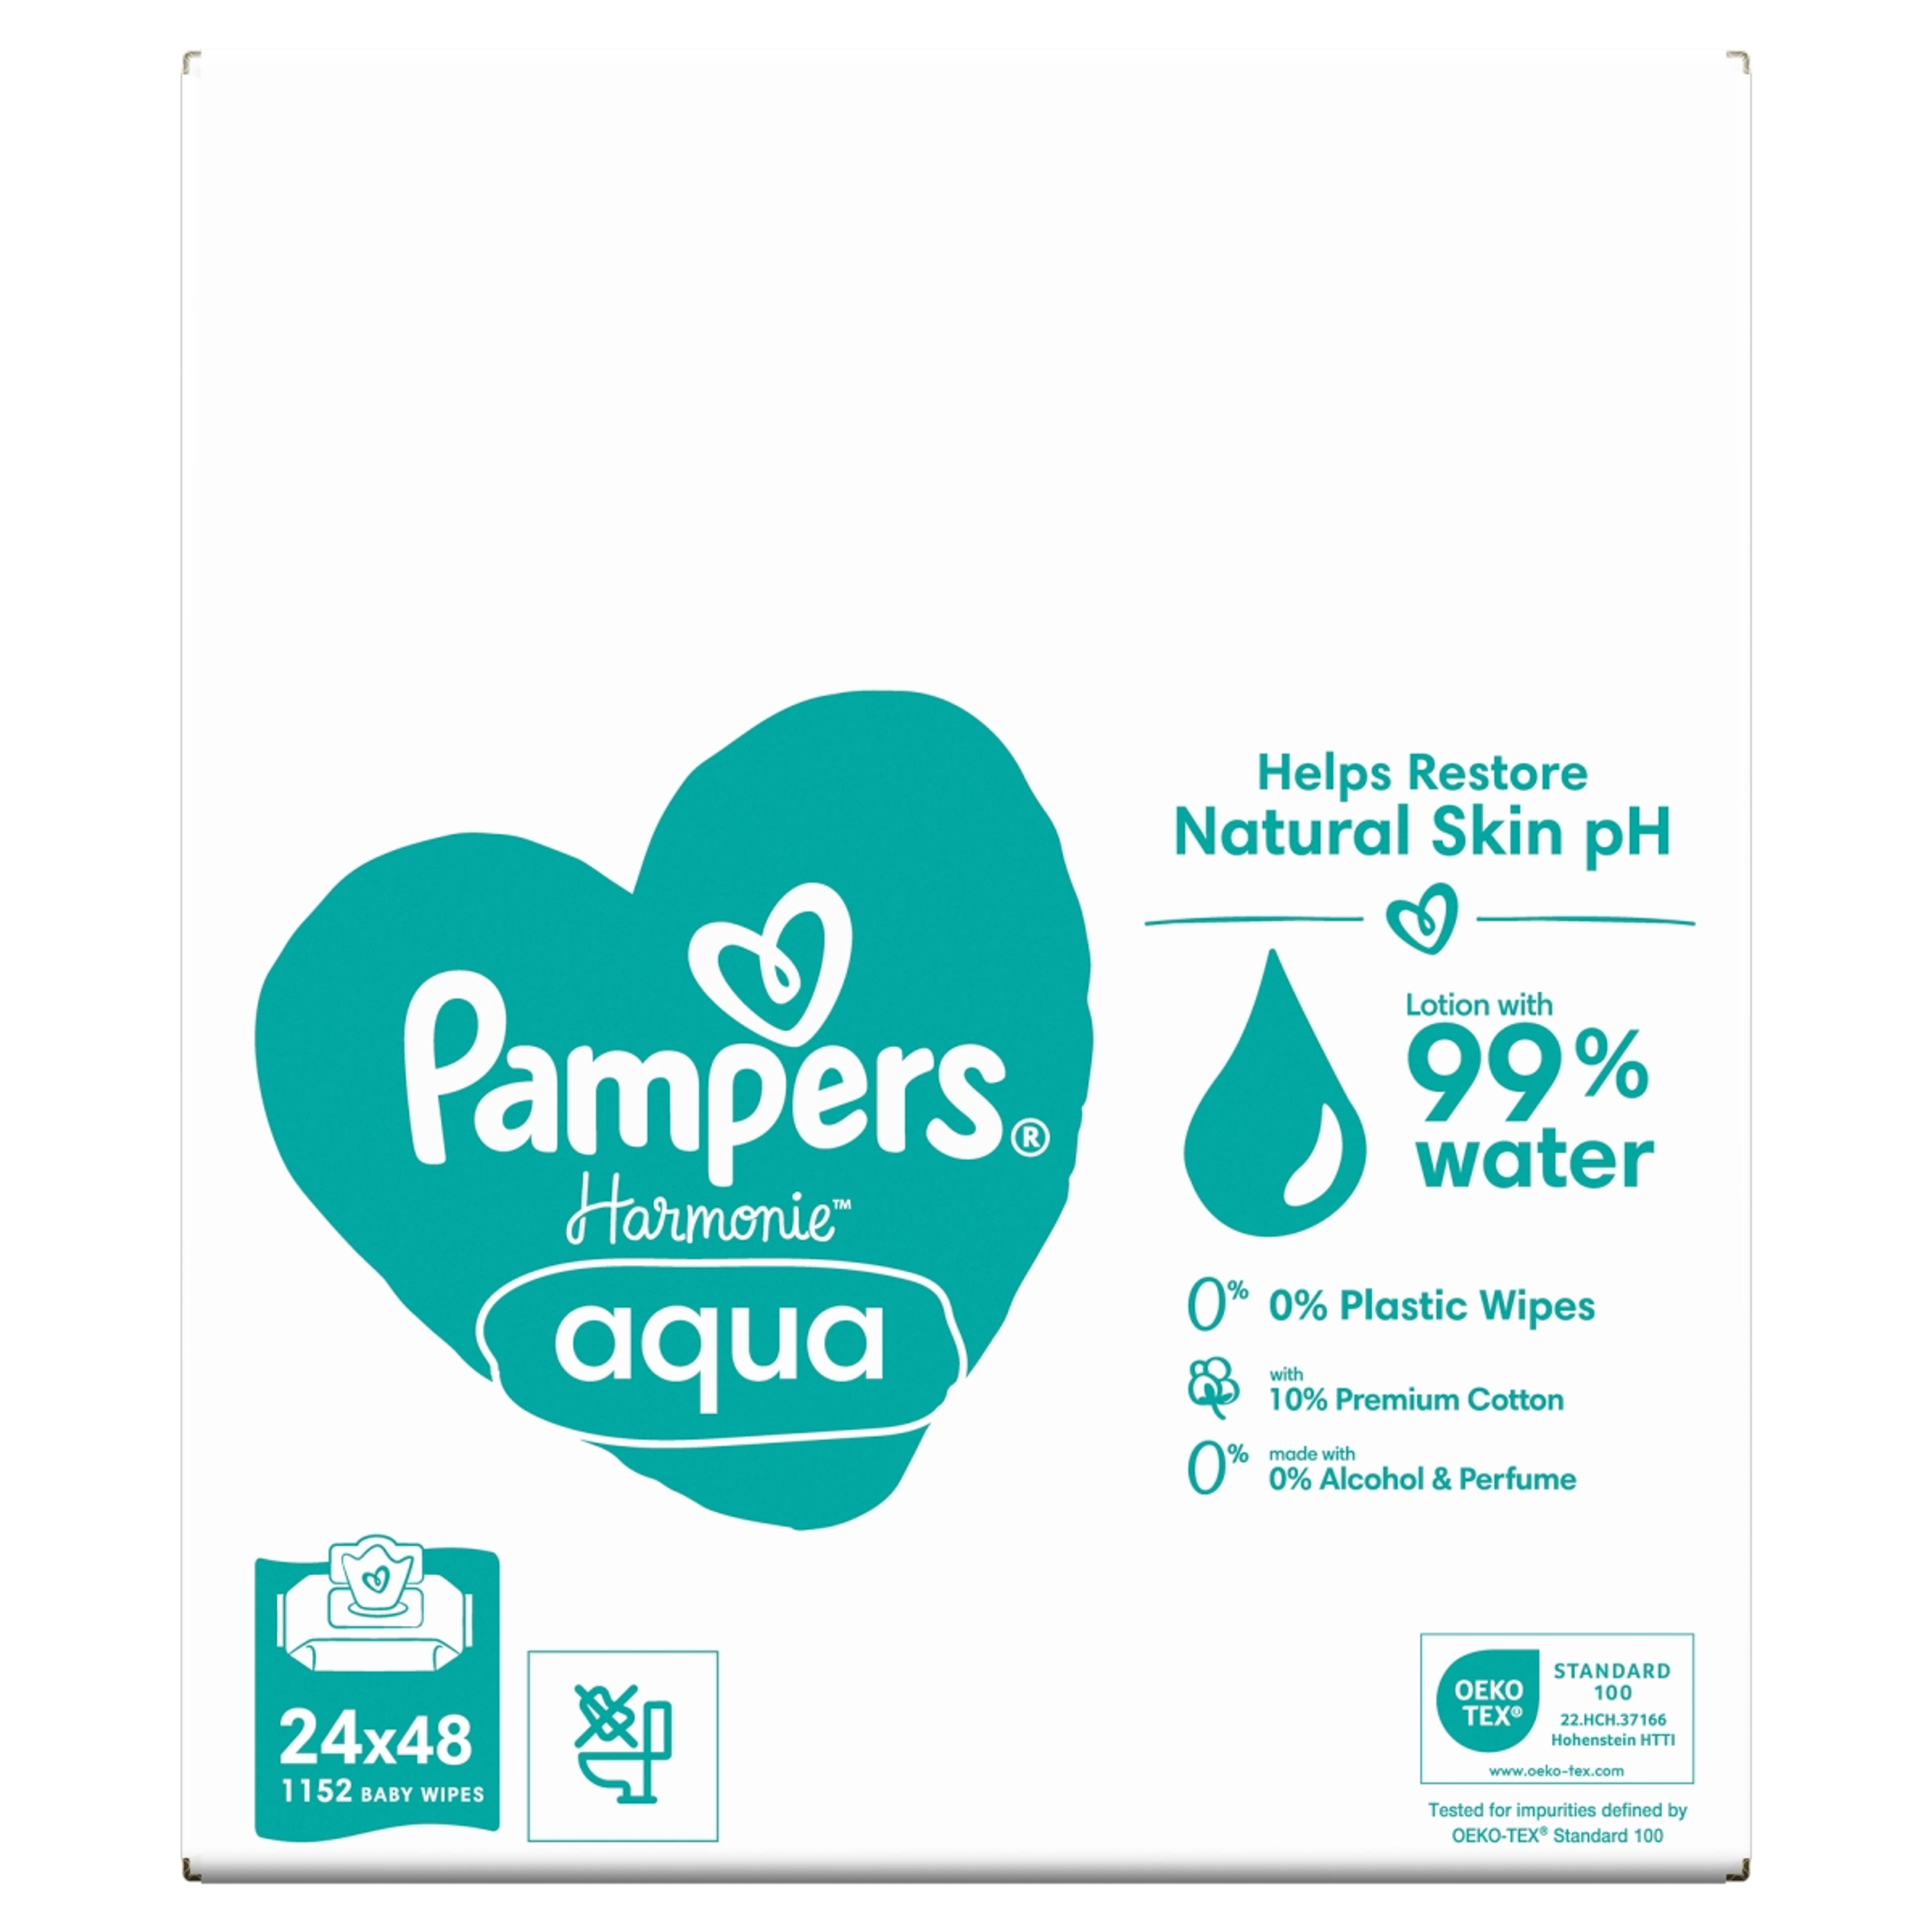 Pampers Harmonie Aqua nedves törlőkendő 24x 48 db - 1152 db